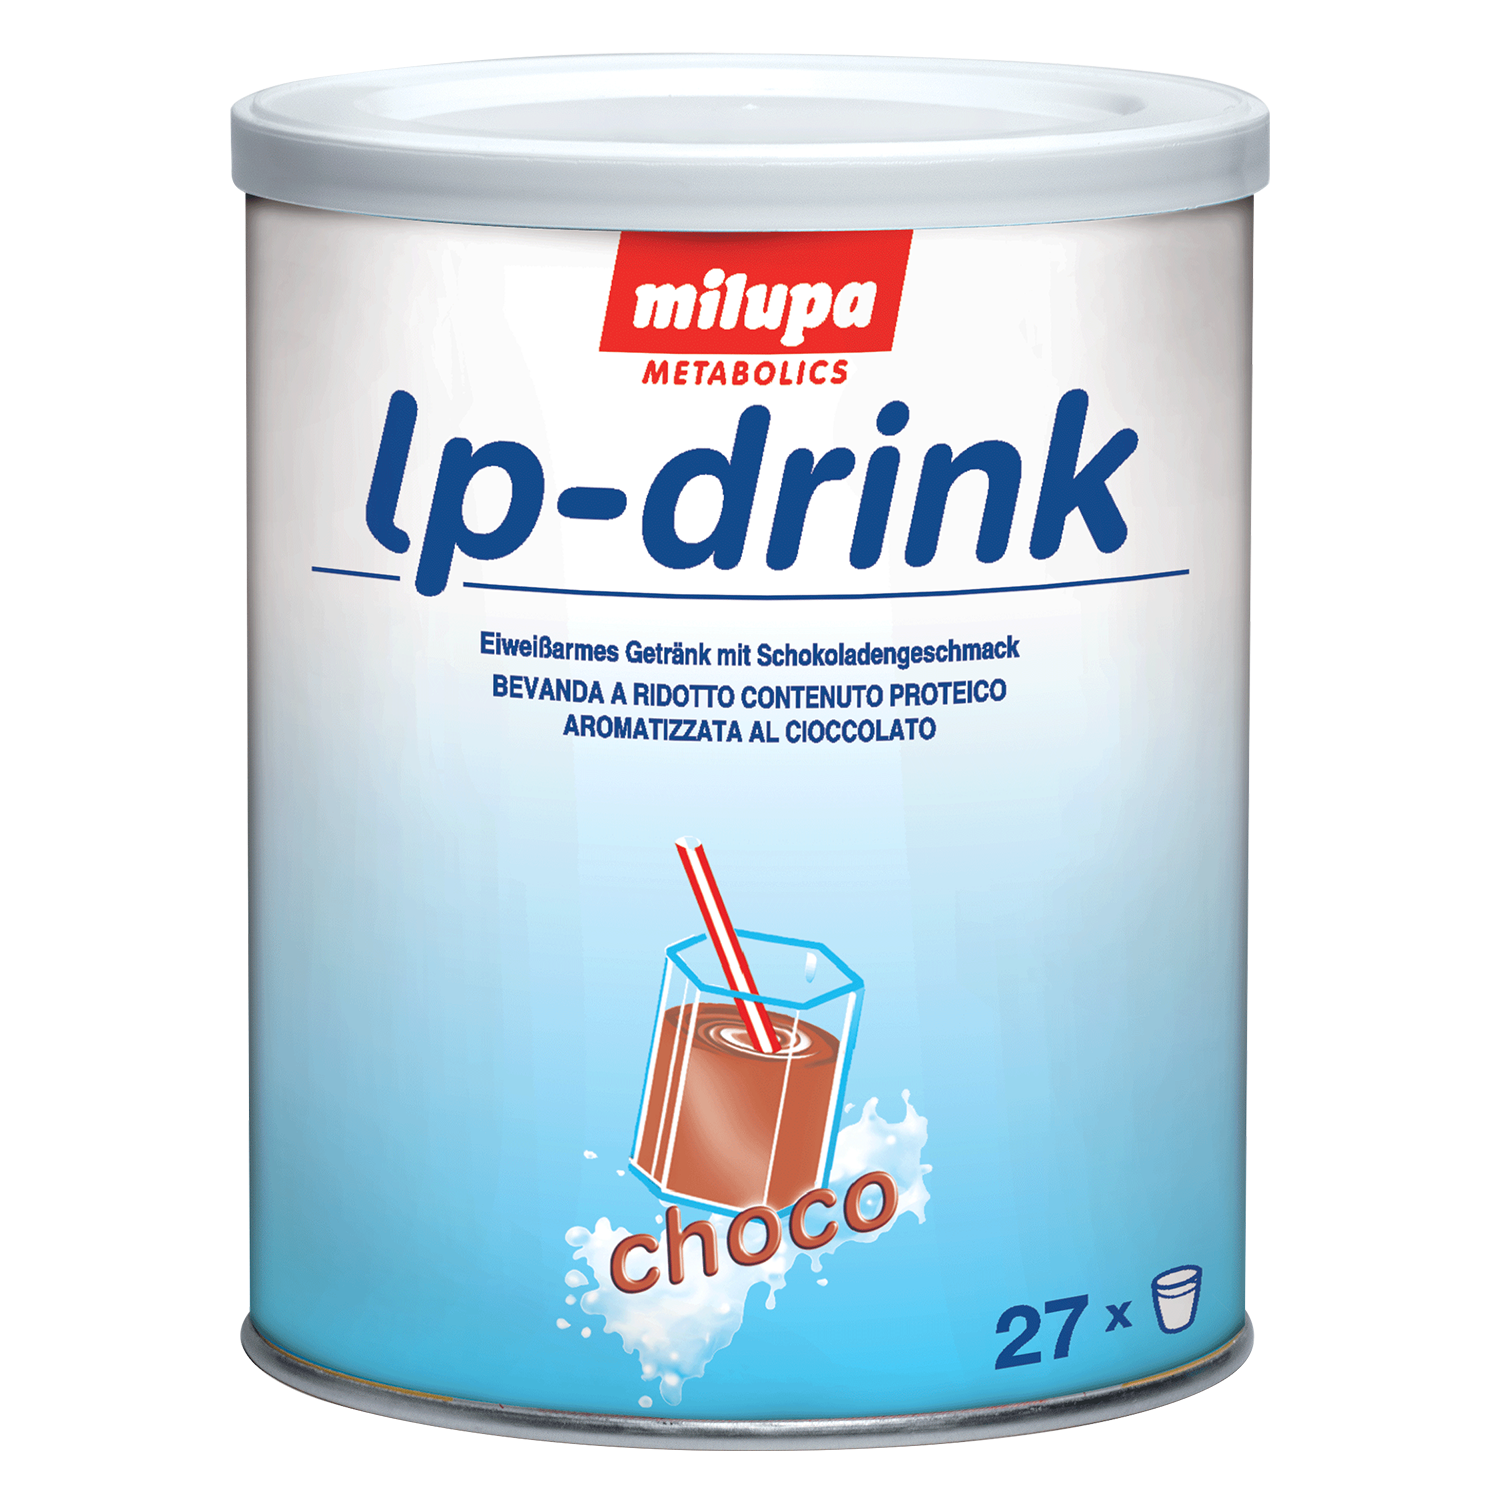 Milupa lp-drink choco (375g)